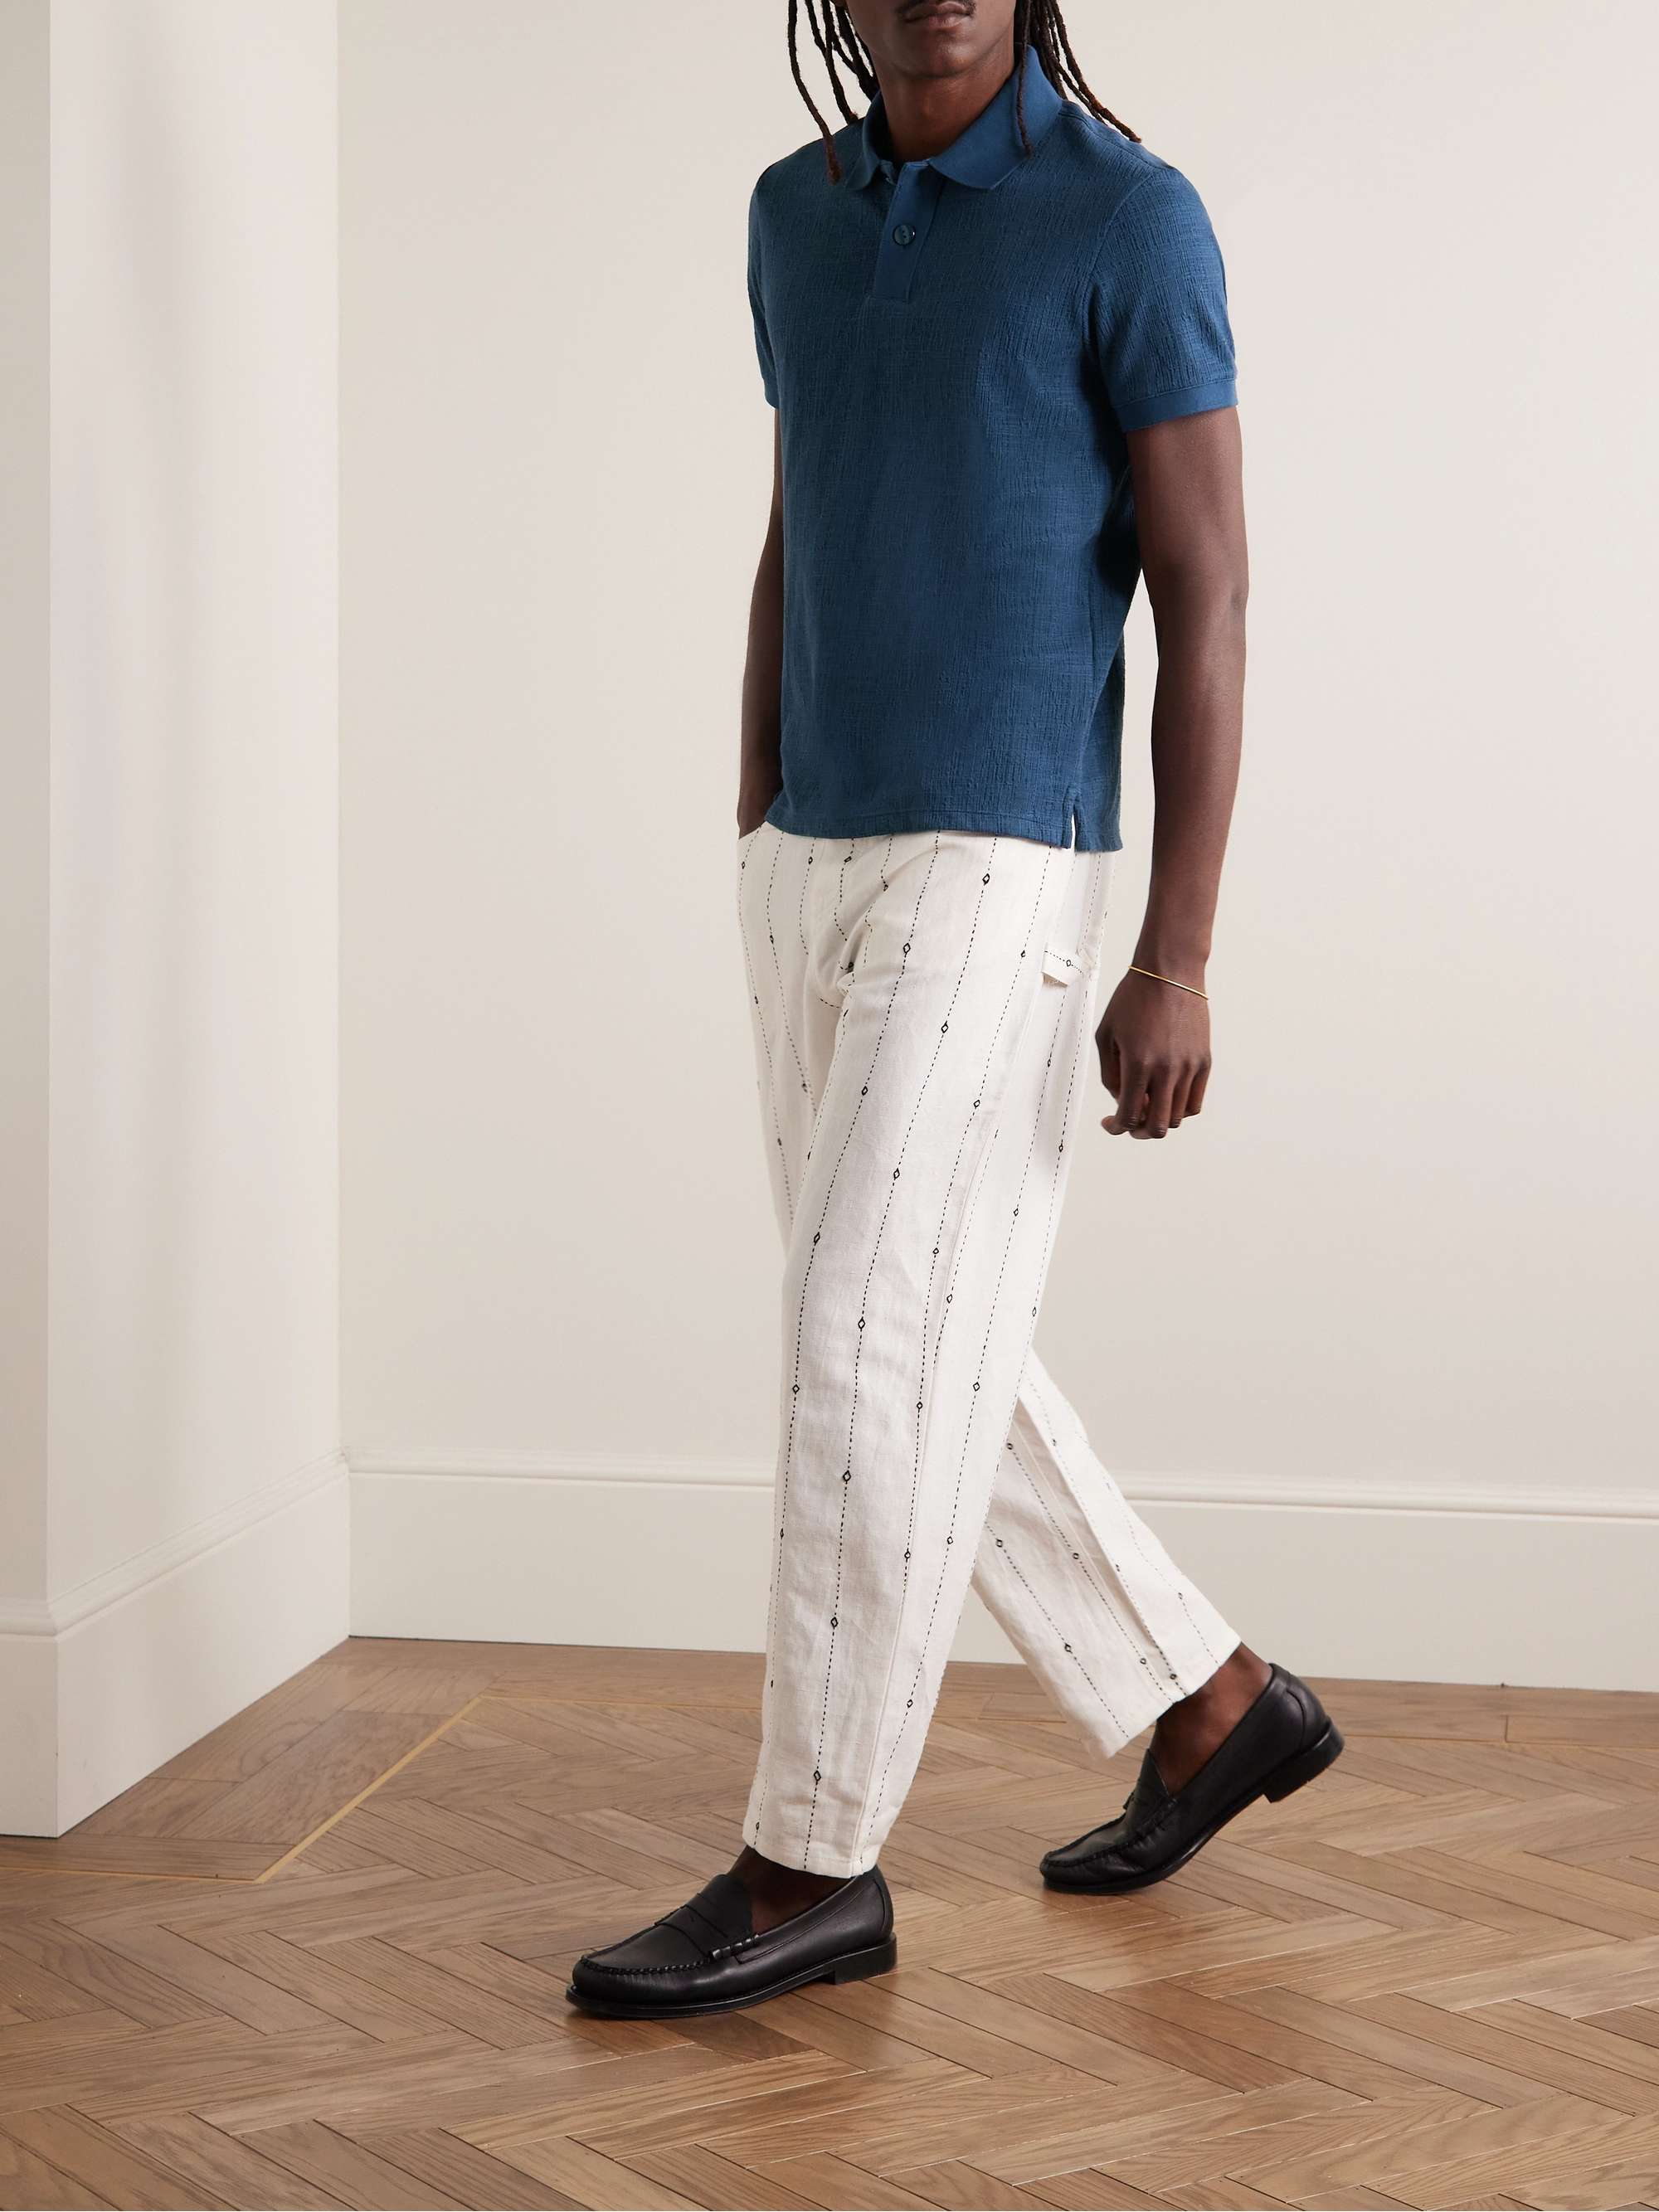 CLUB MONACO Textured Stretch Cotton-Blend Polo Shirt for Men | MR PORTER